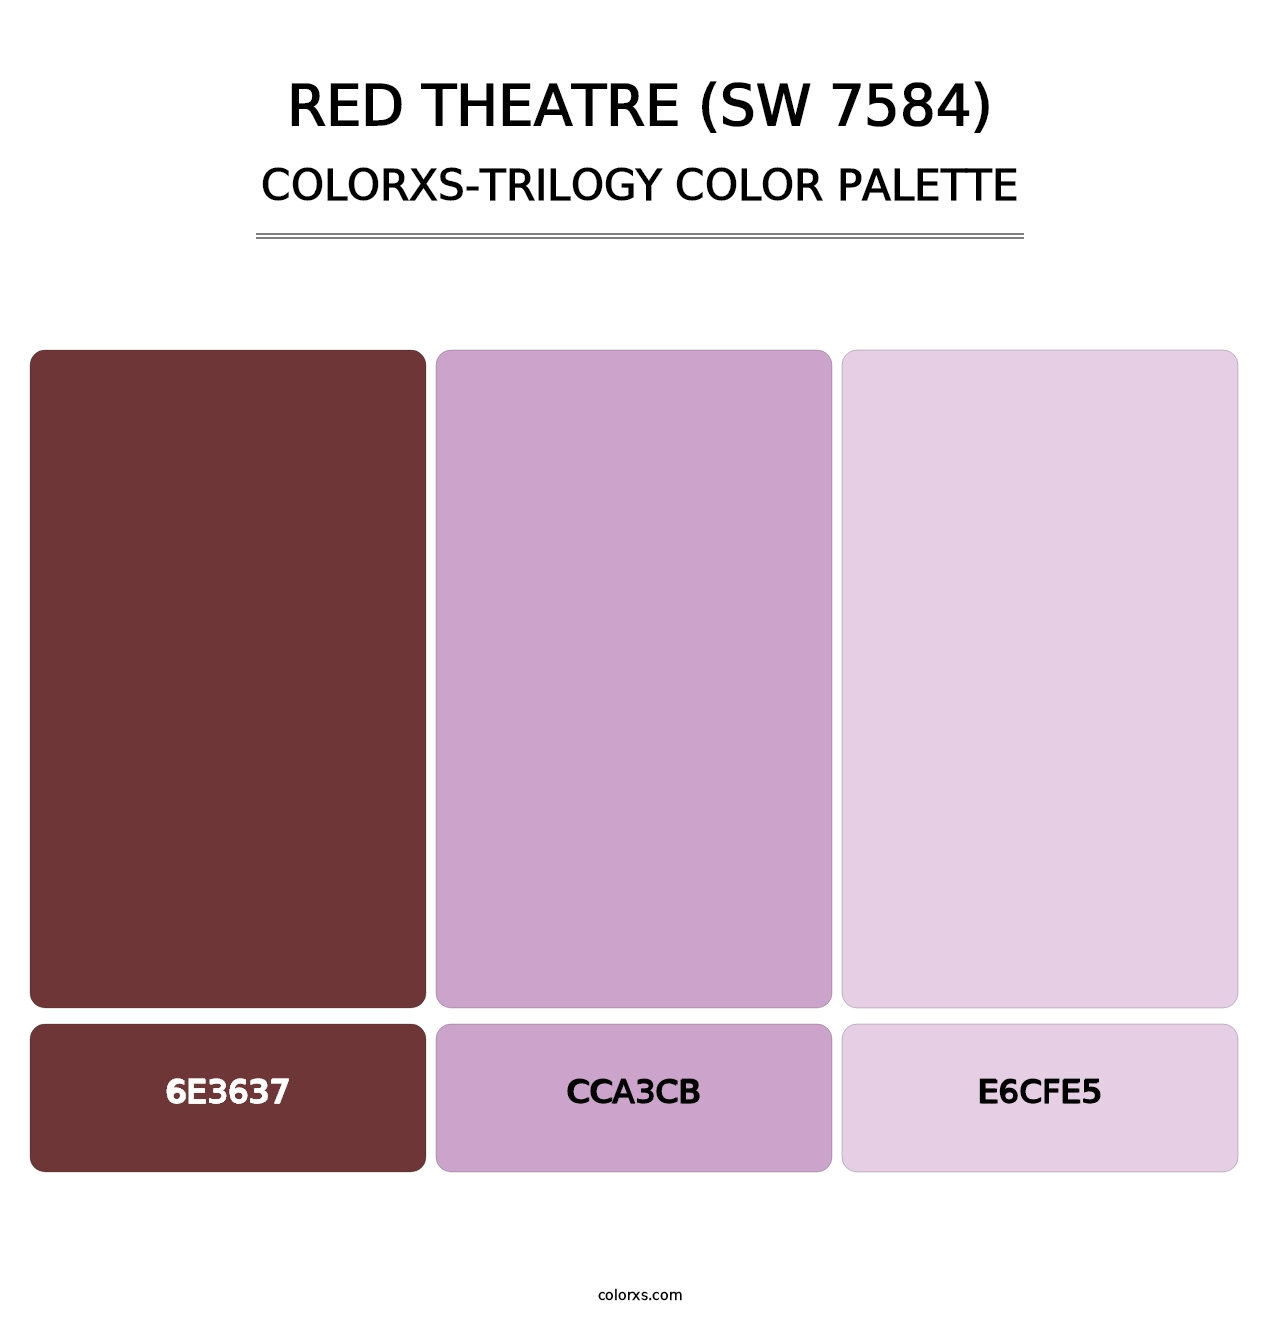 Red Theatre (SW 7584) - Colorxs Trilogy Palette